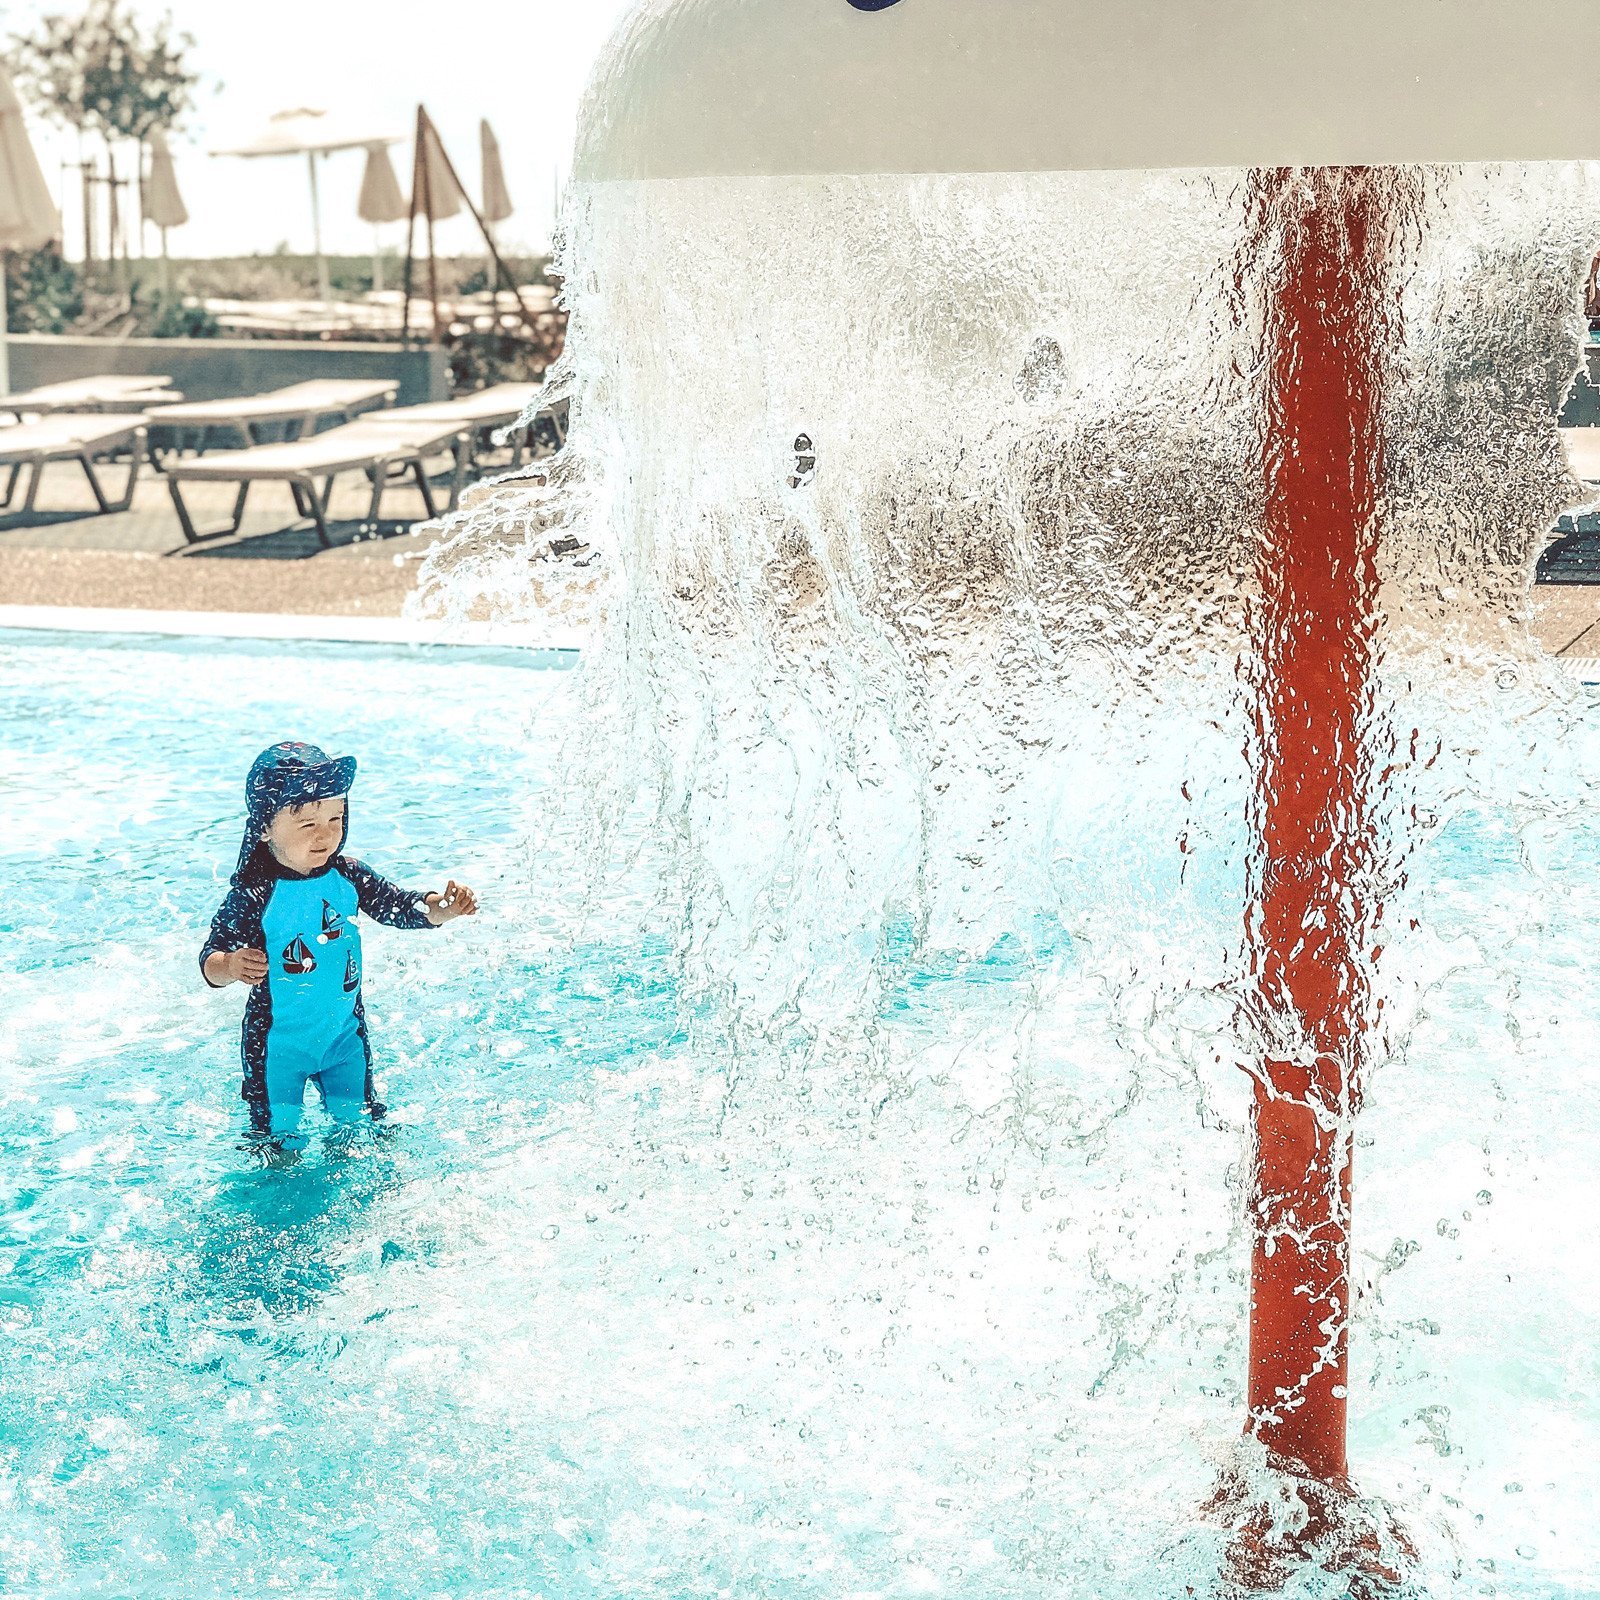 watery fun at Wave Resort